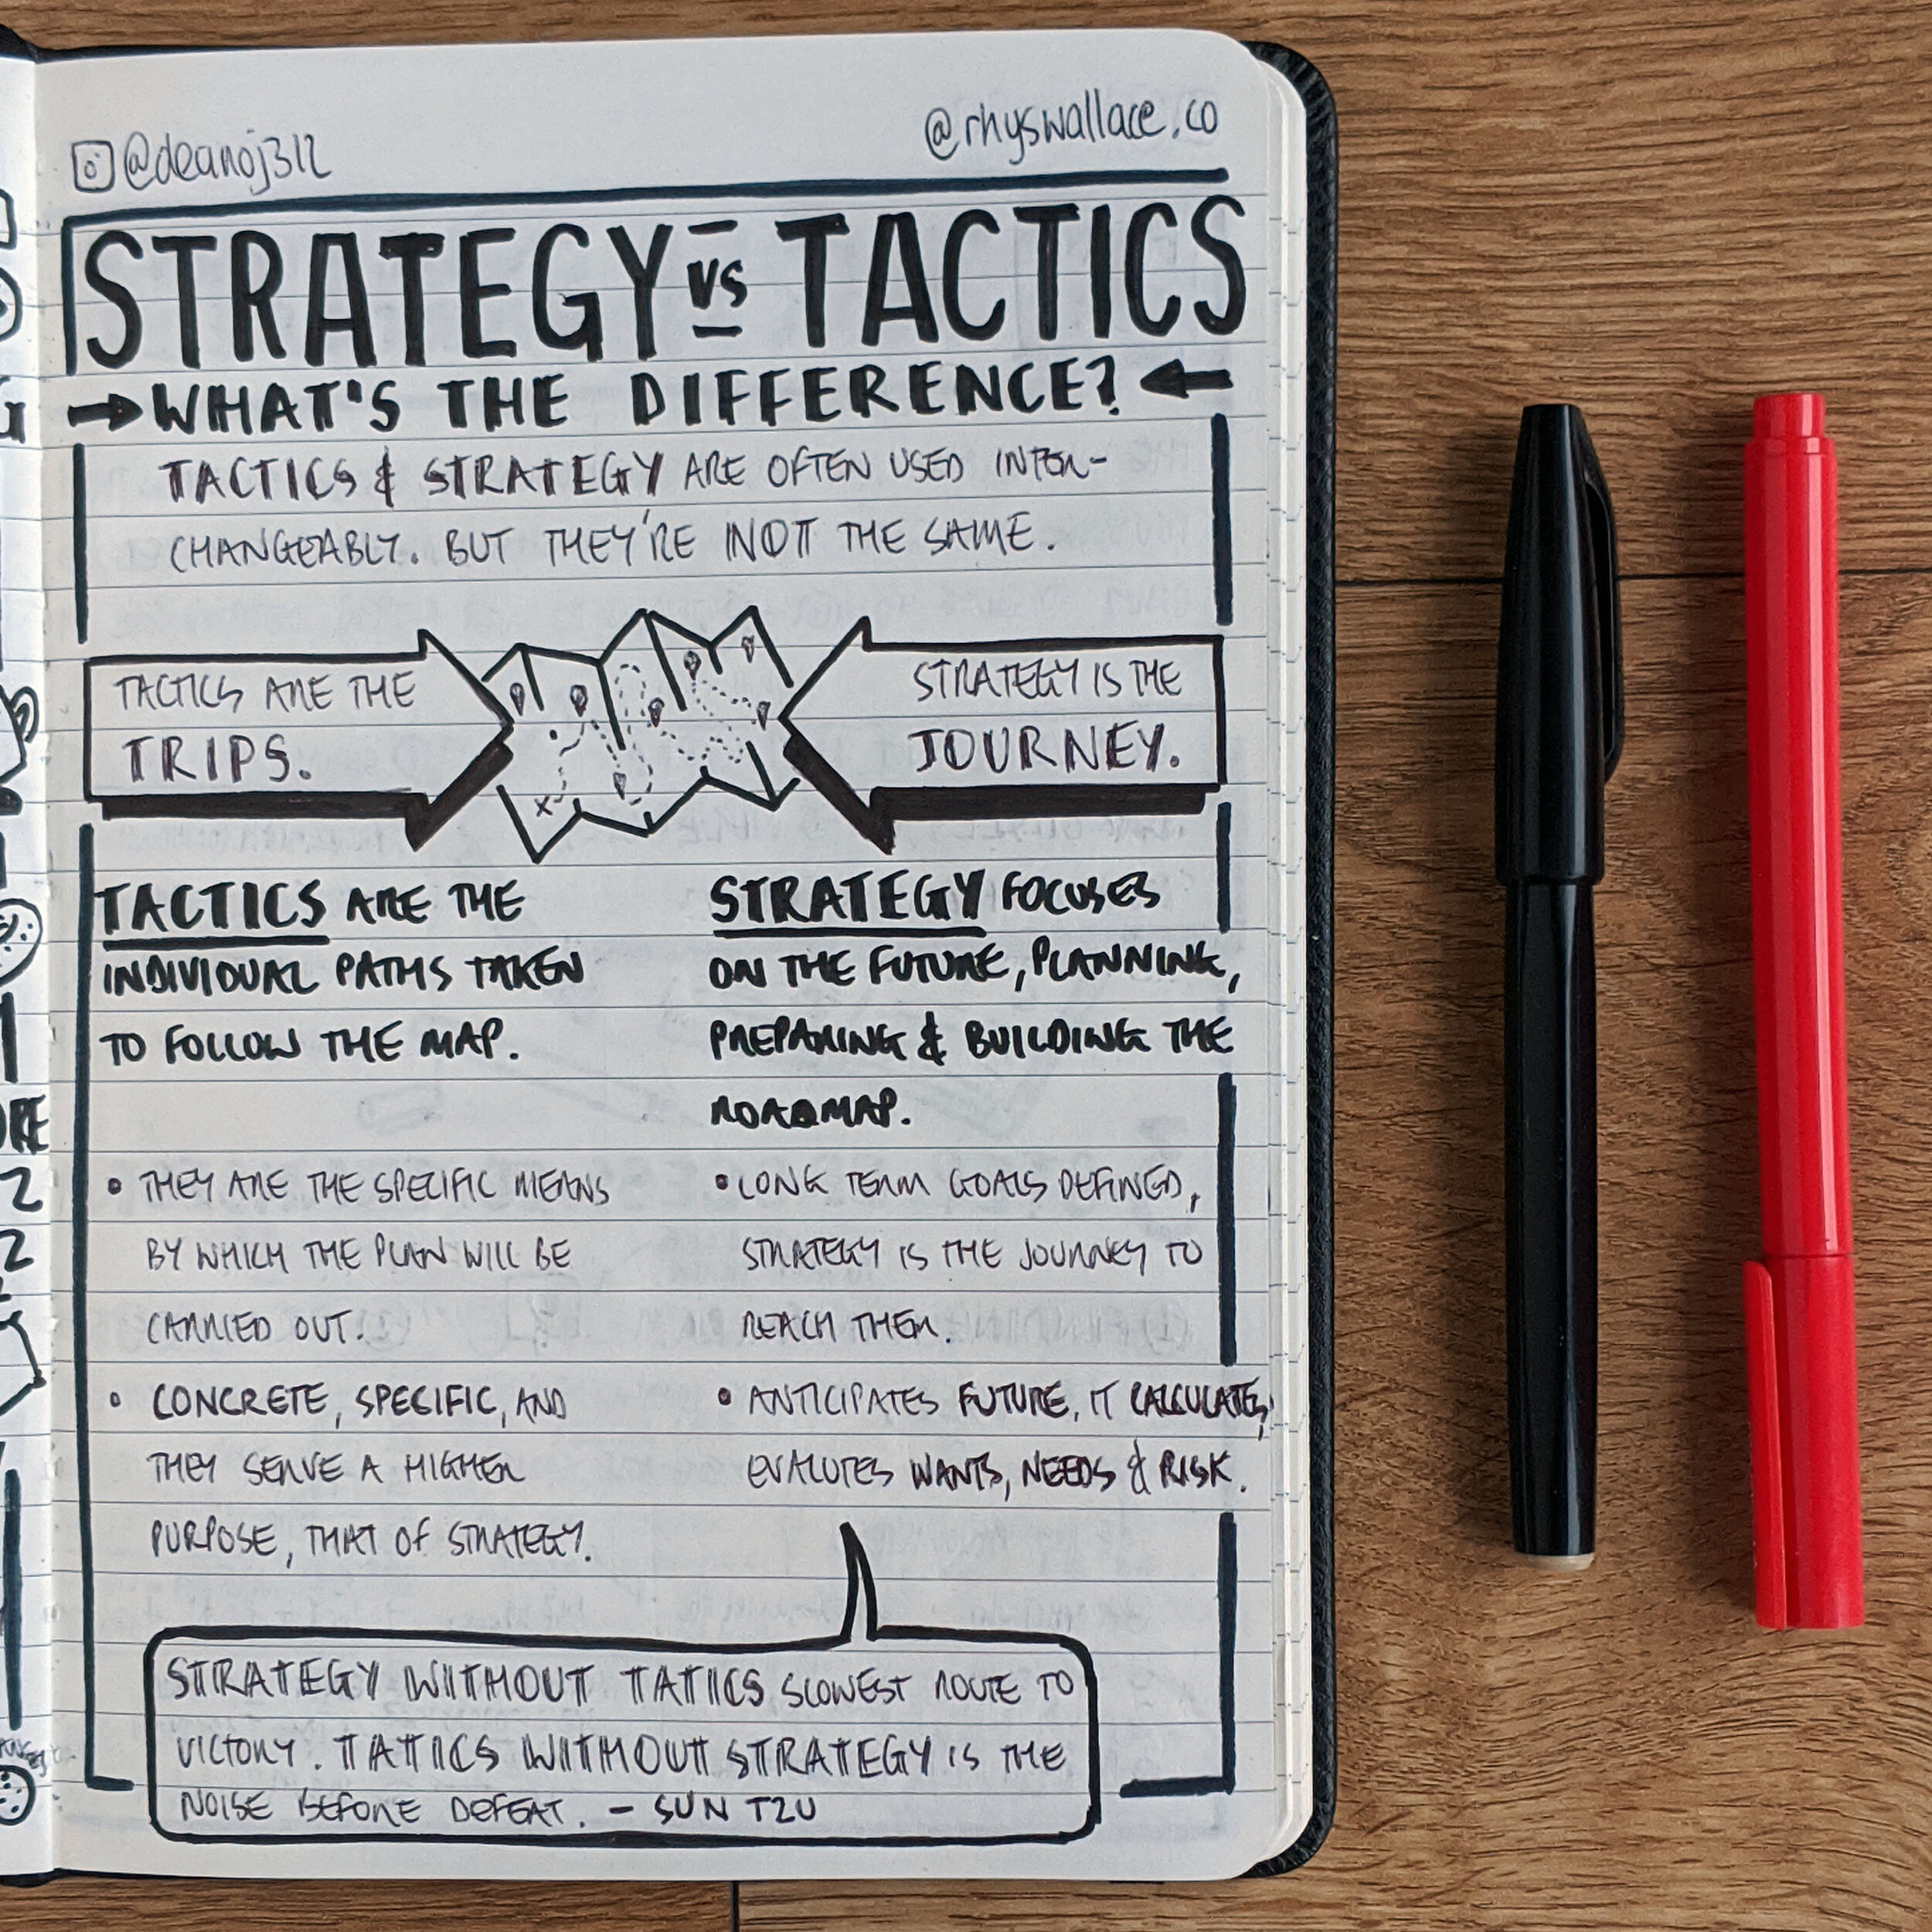 StrategyVsTactics1.jpg